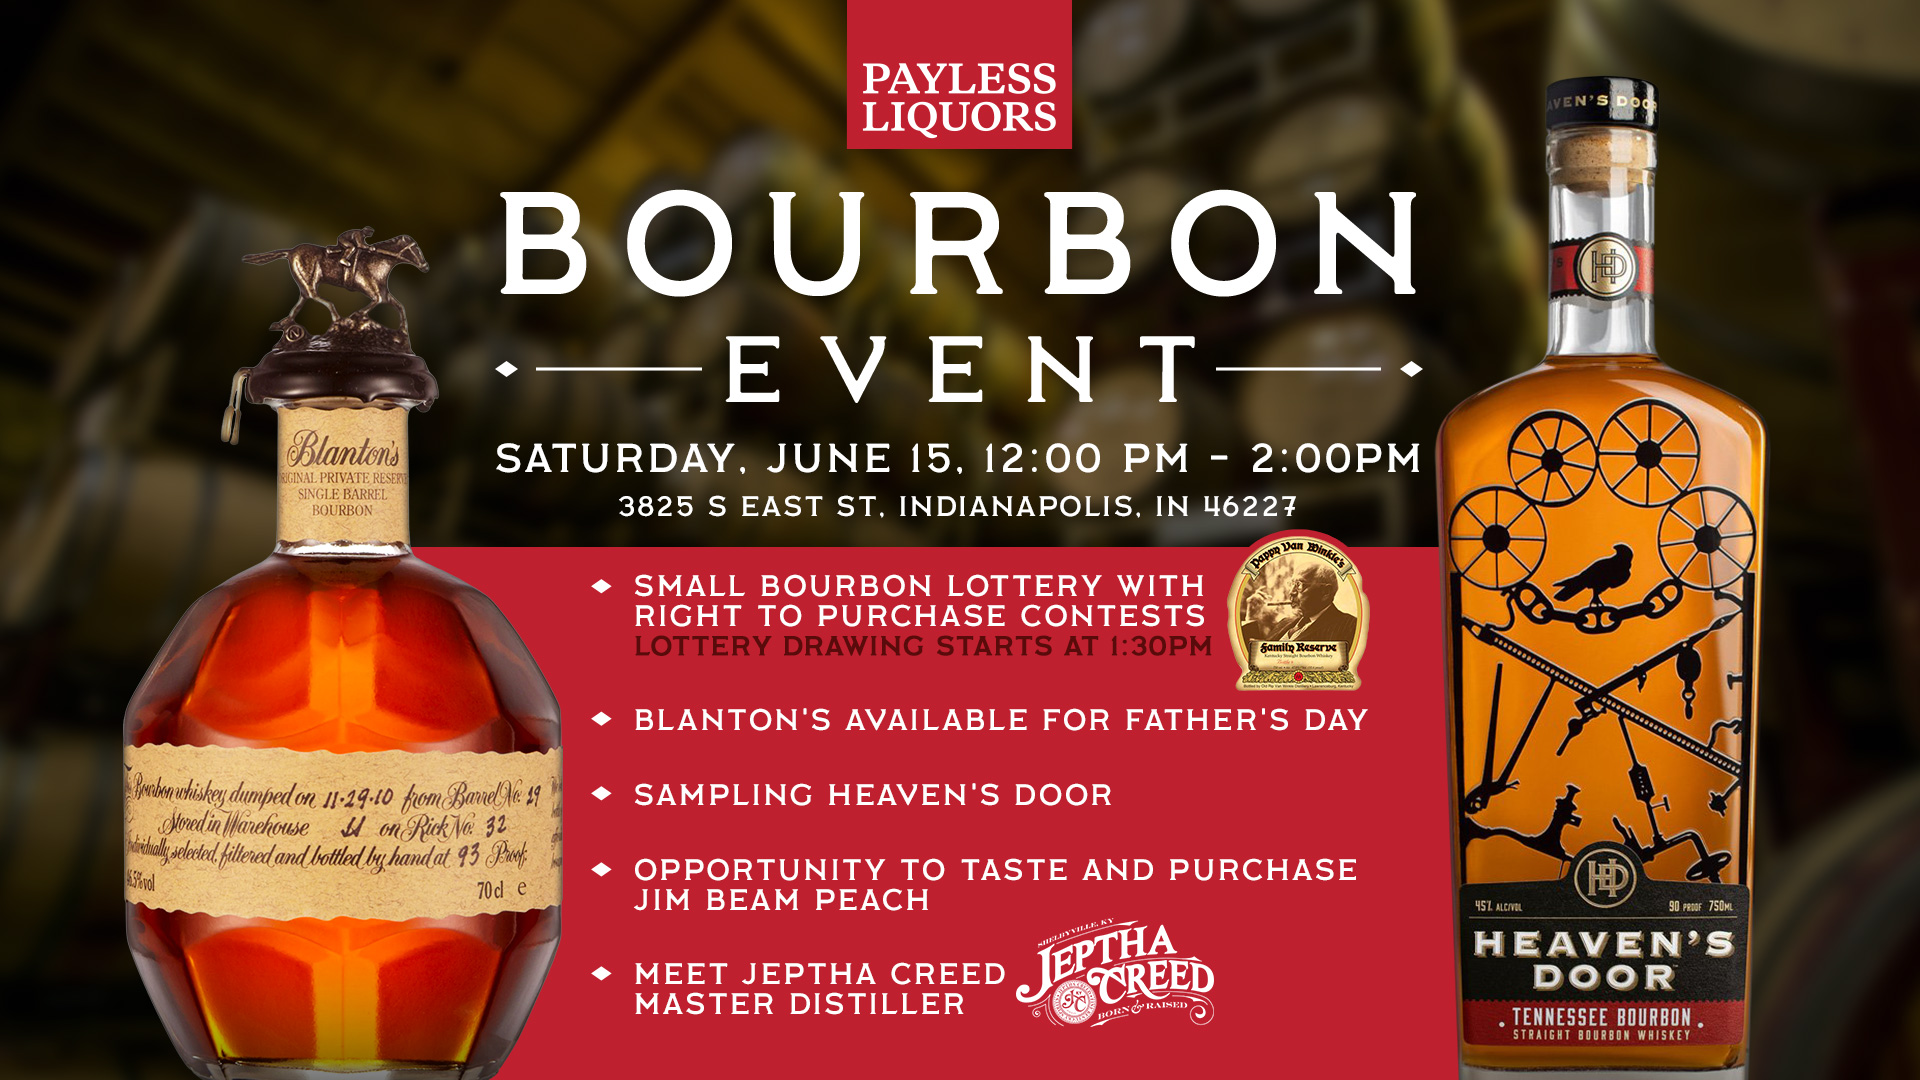 Payless Liquors Bourbon Event